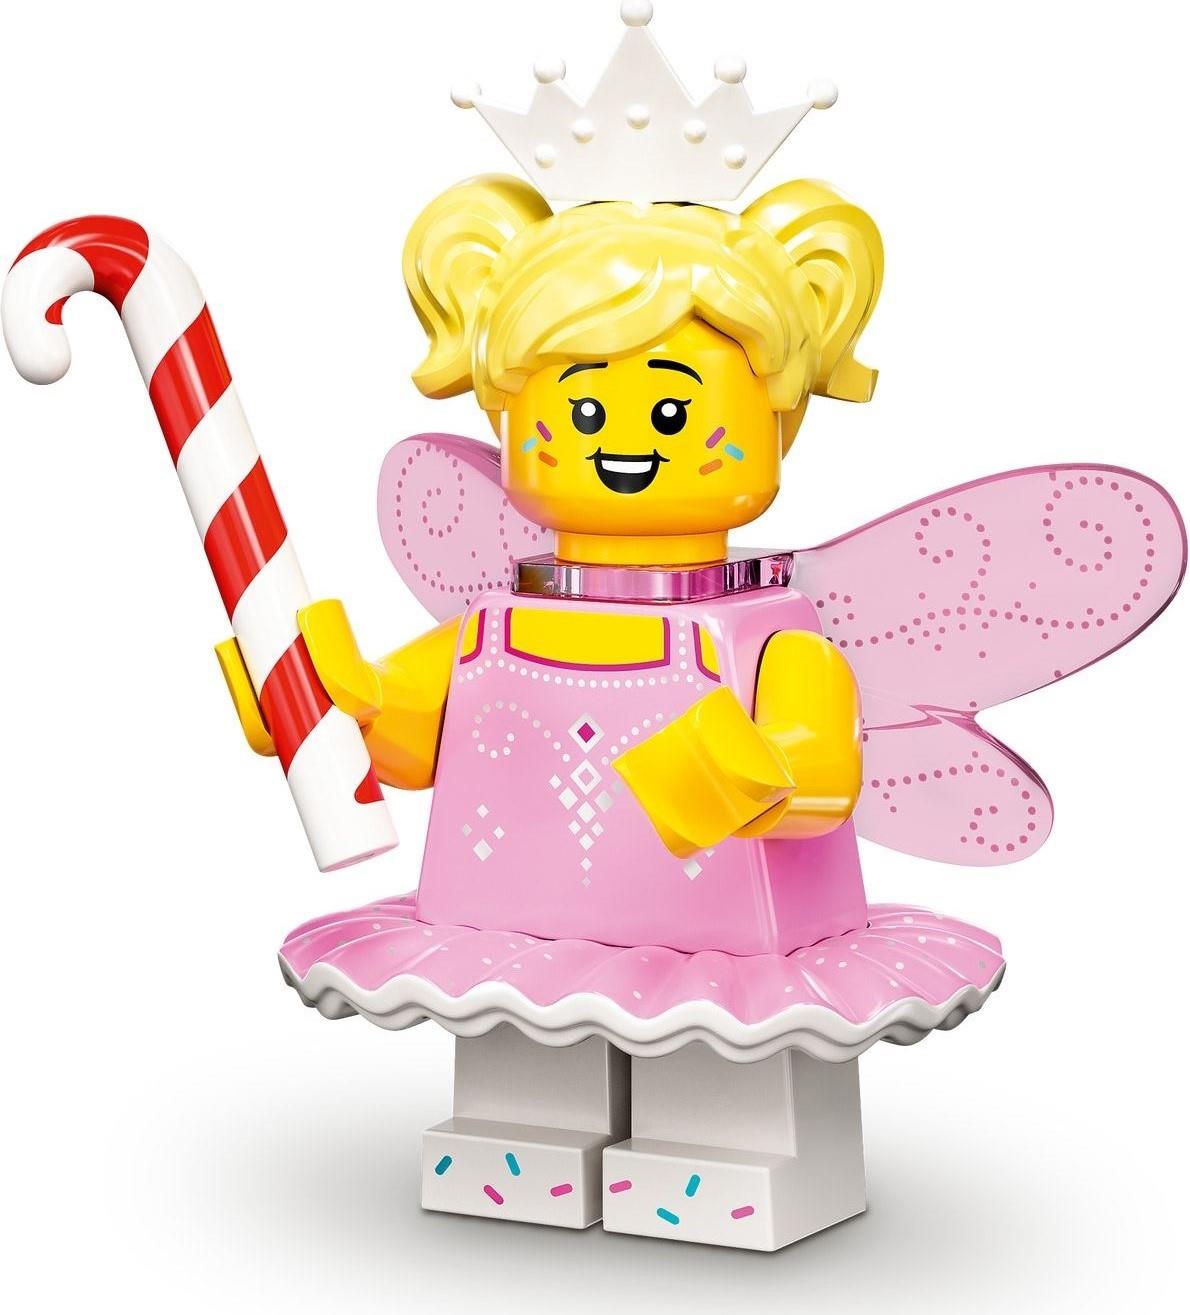 LEGO 71034 Series 23 Popcorn Costume Suit Minifigure 7 Collectible  Minifigures CMF Christmas Holiday Seasonal 